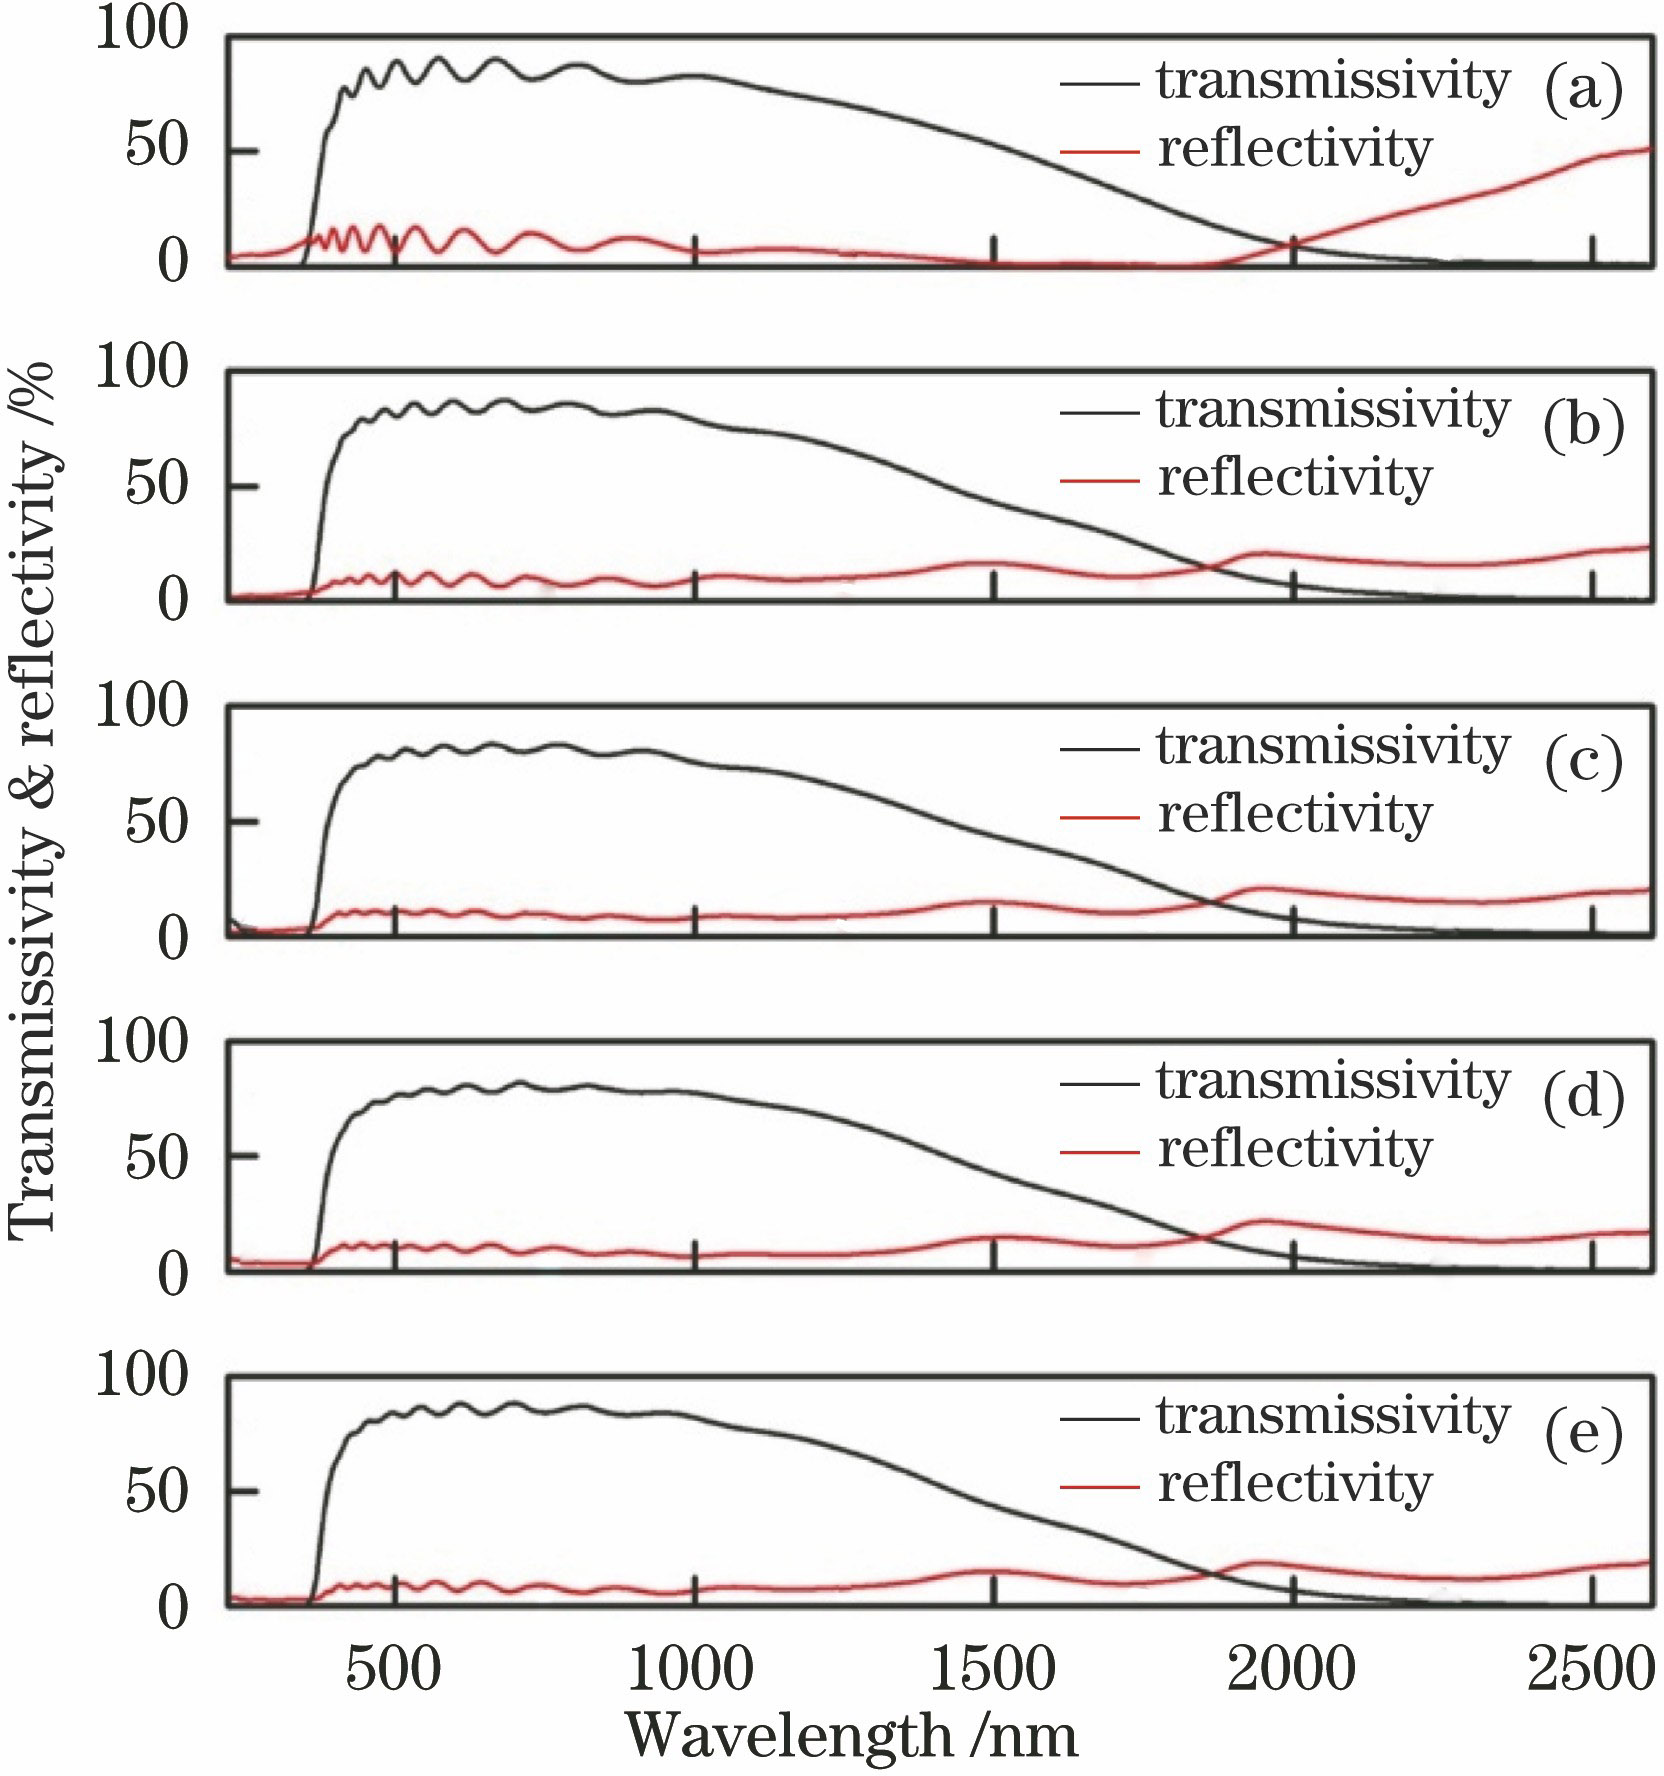 Transmissivity and reflectivity spectra of samples 1--5. (a) Sample 1; (b) sample 2; (c) sample 3; (d) sample 4; (e) sample 5